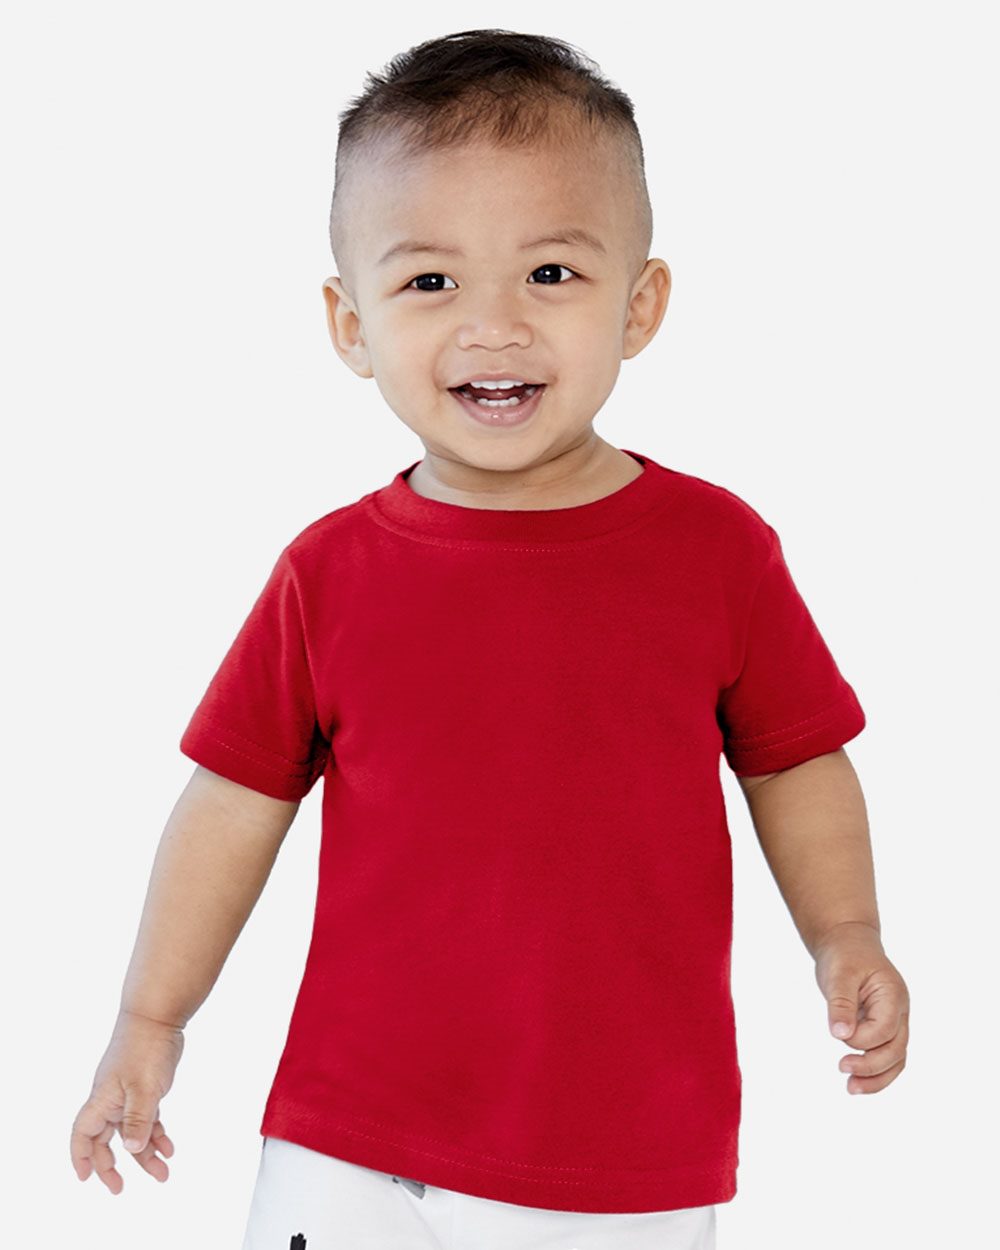 infant jersey shirt